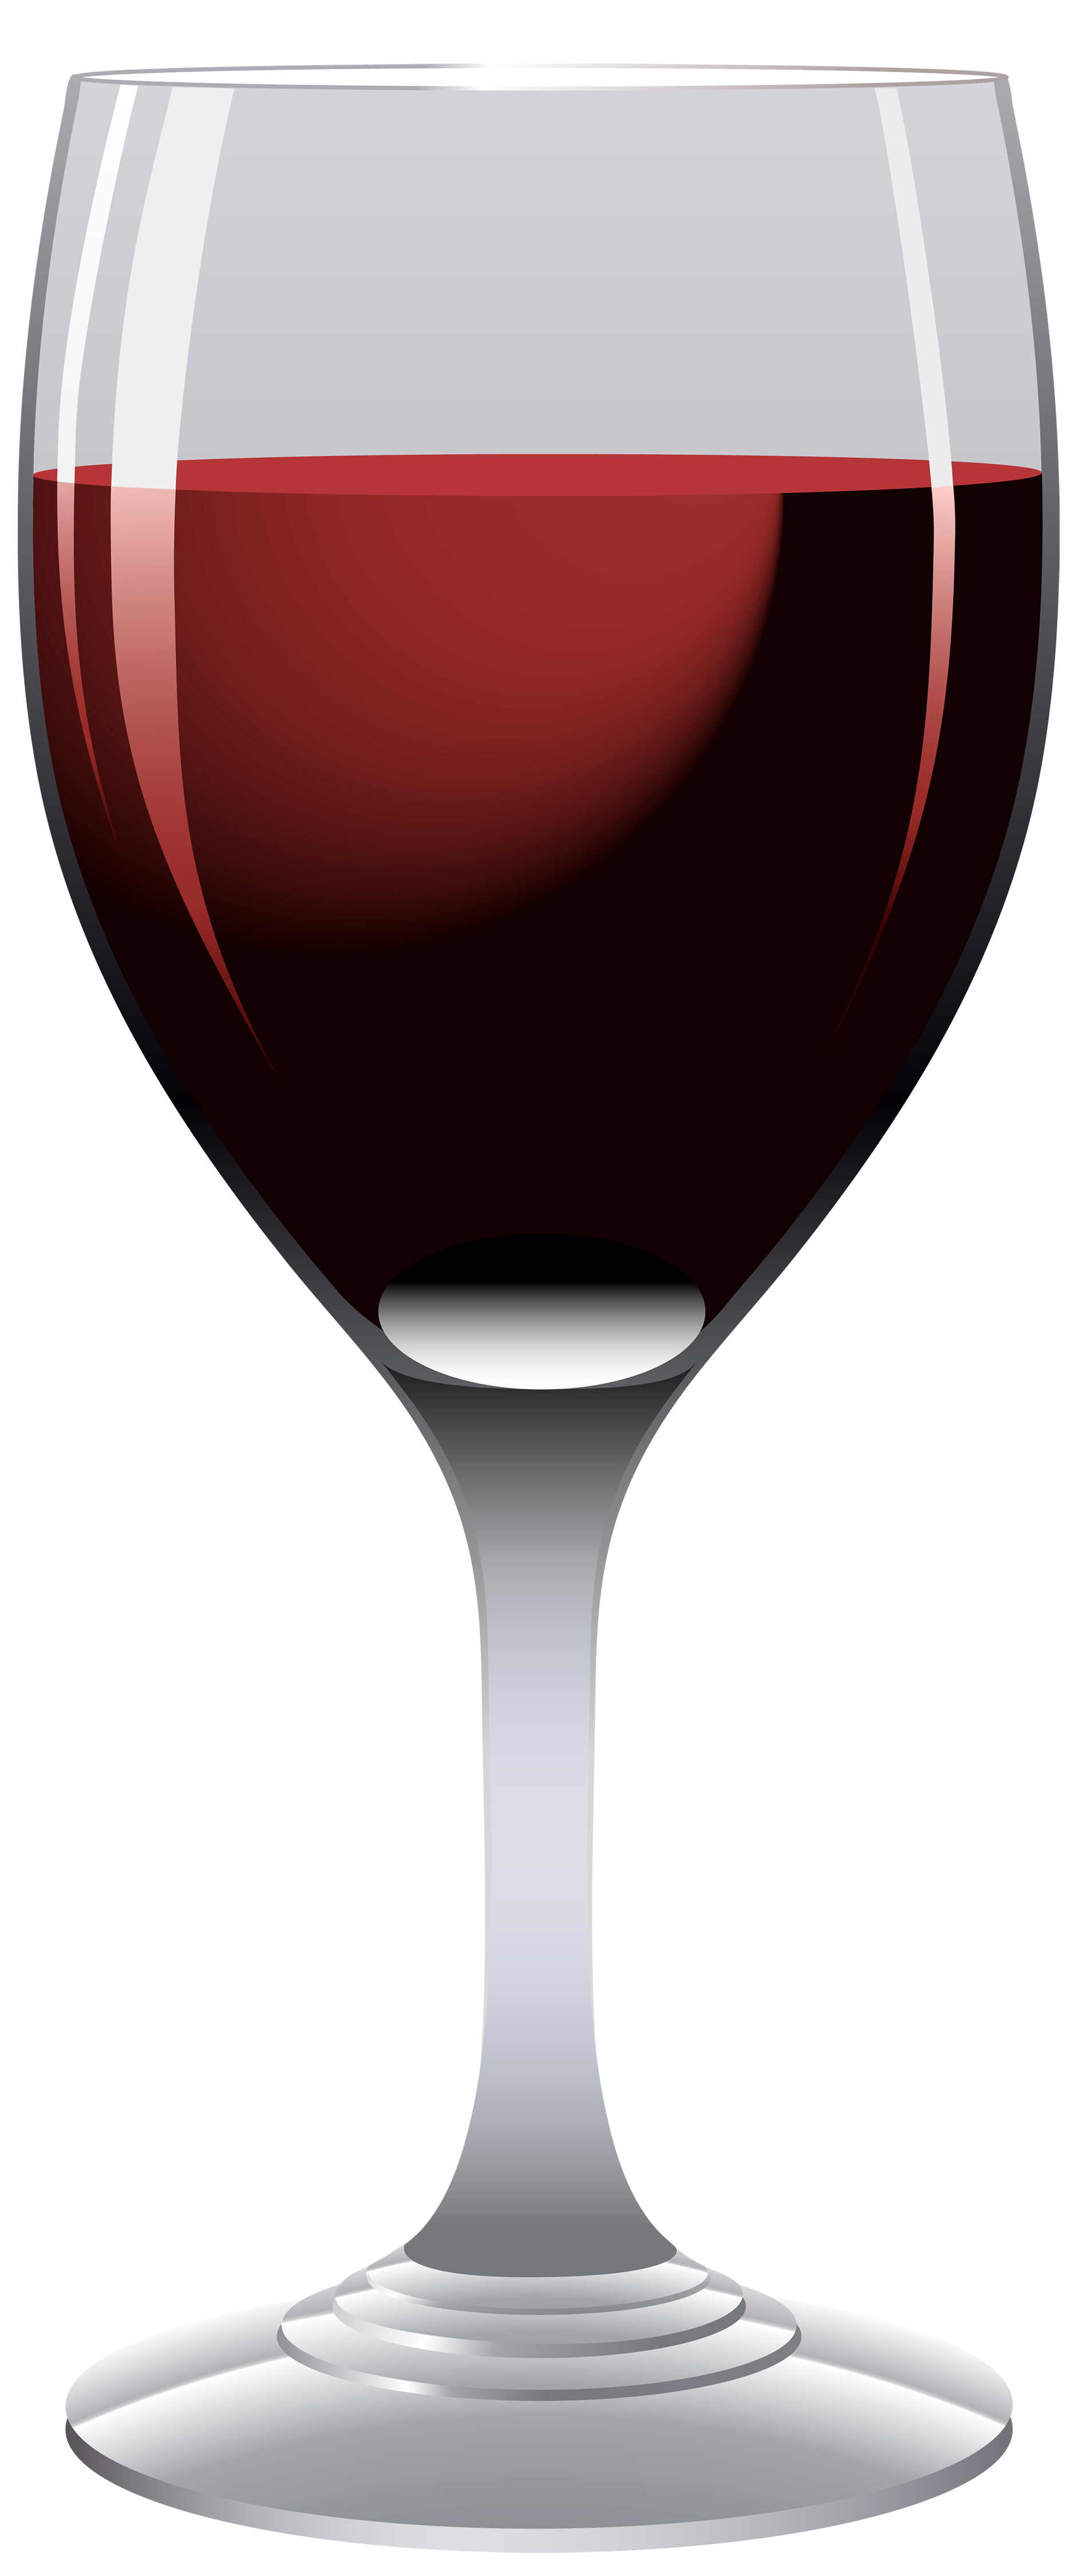 Clipart wine glass 